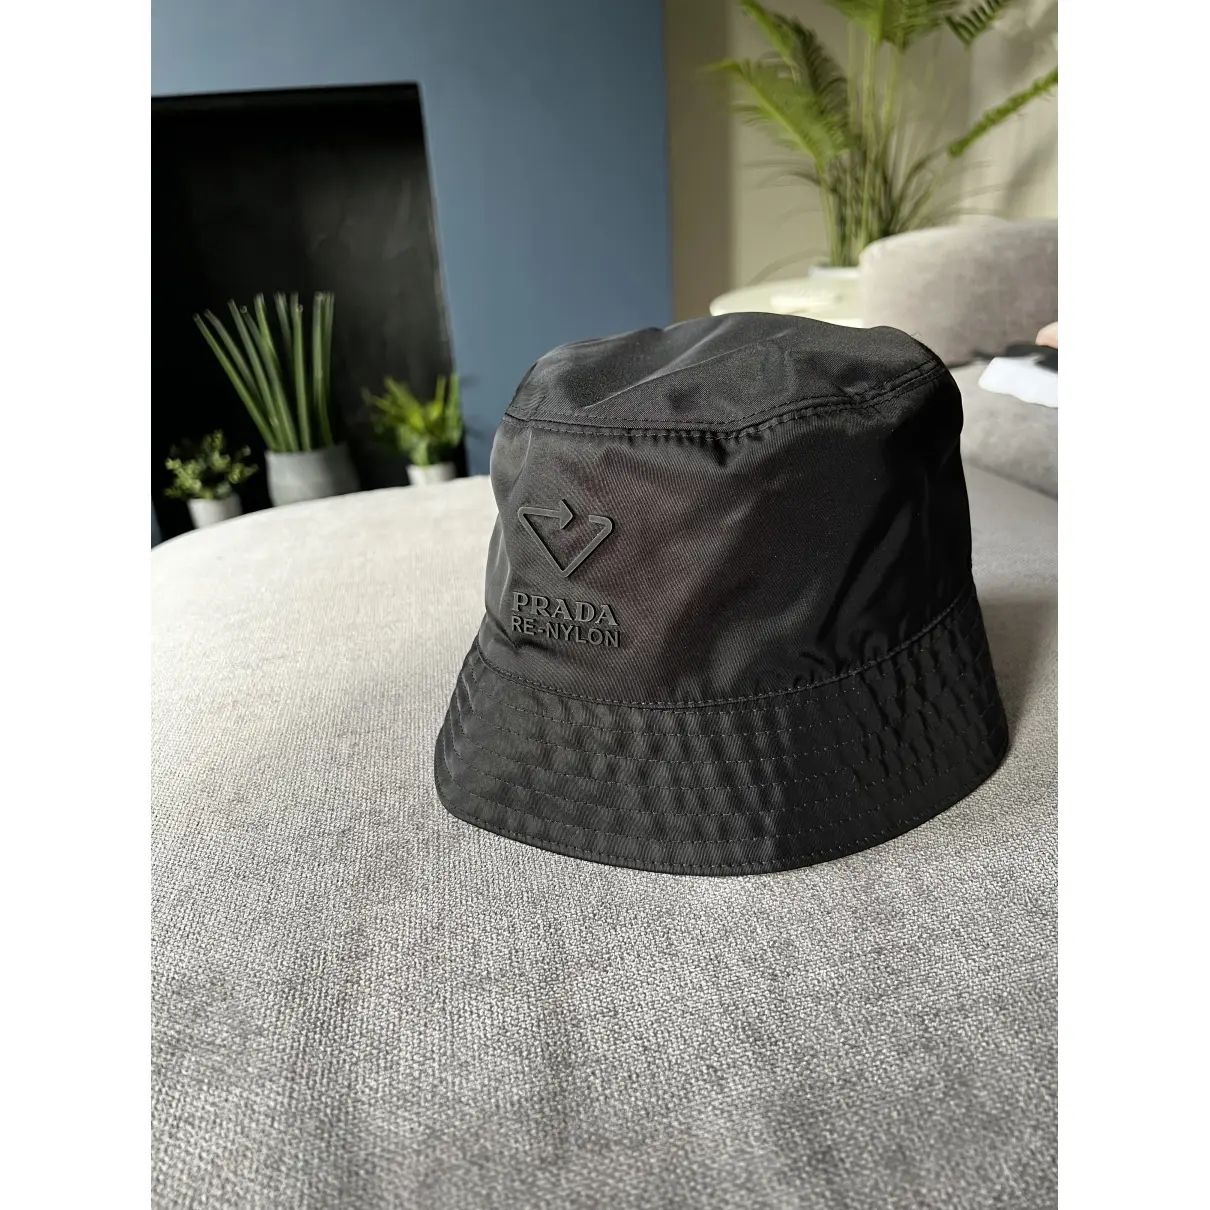 Buy Prada Hat online